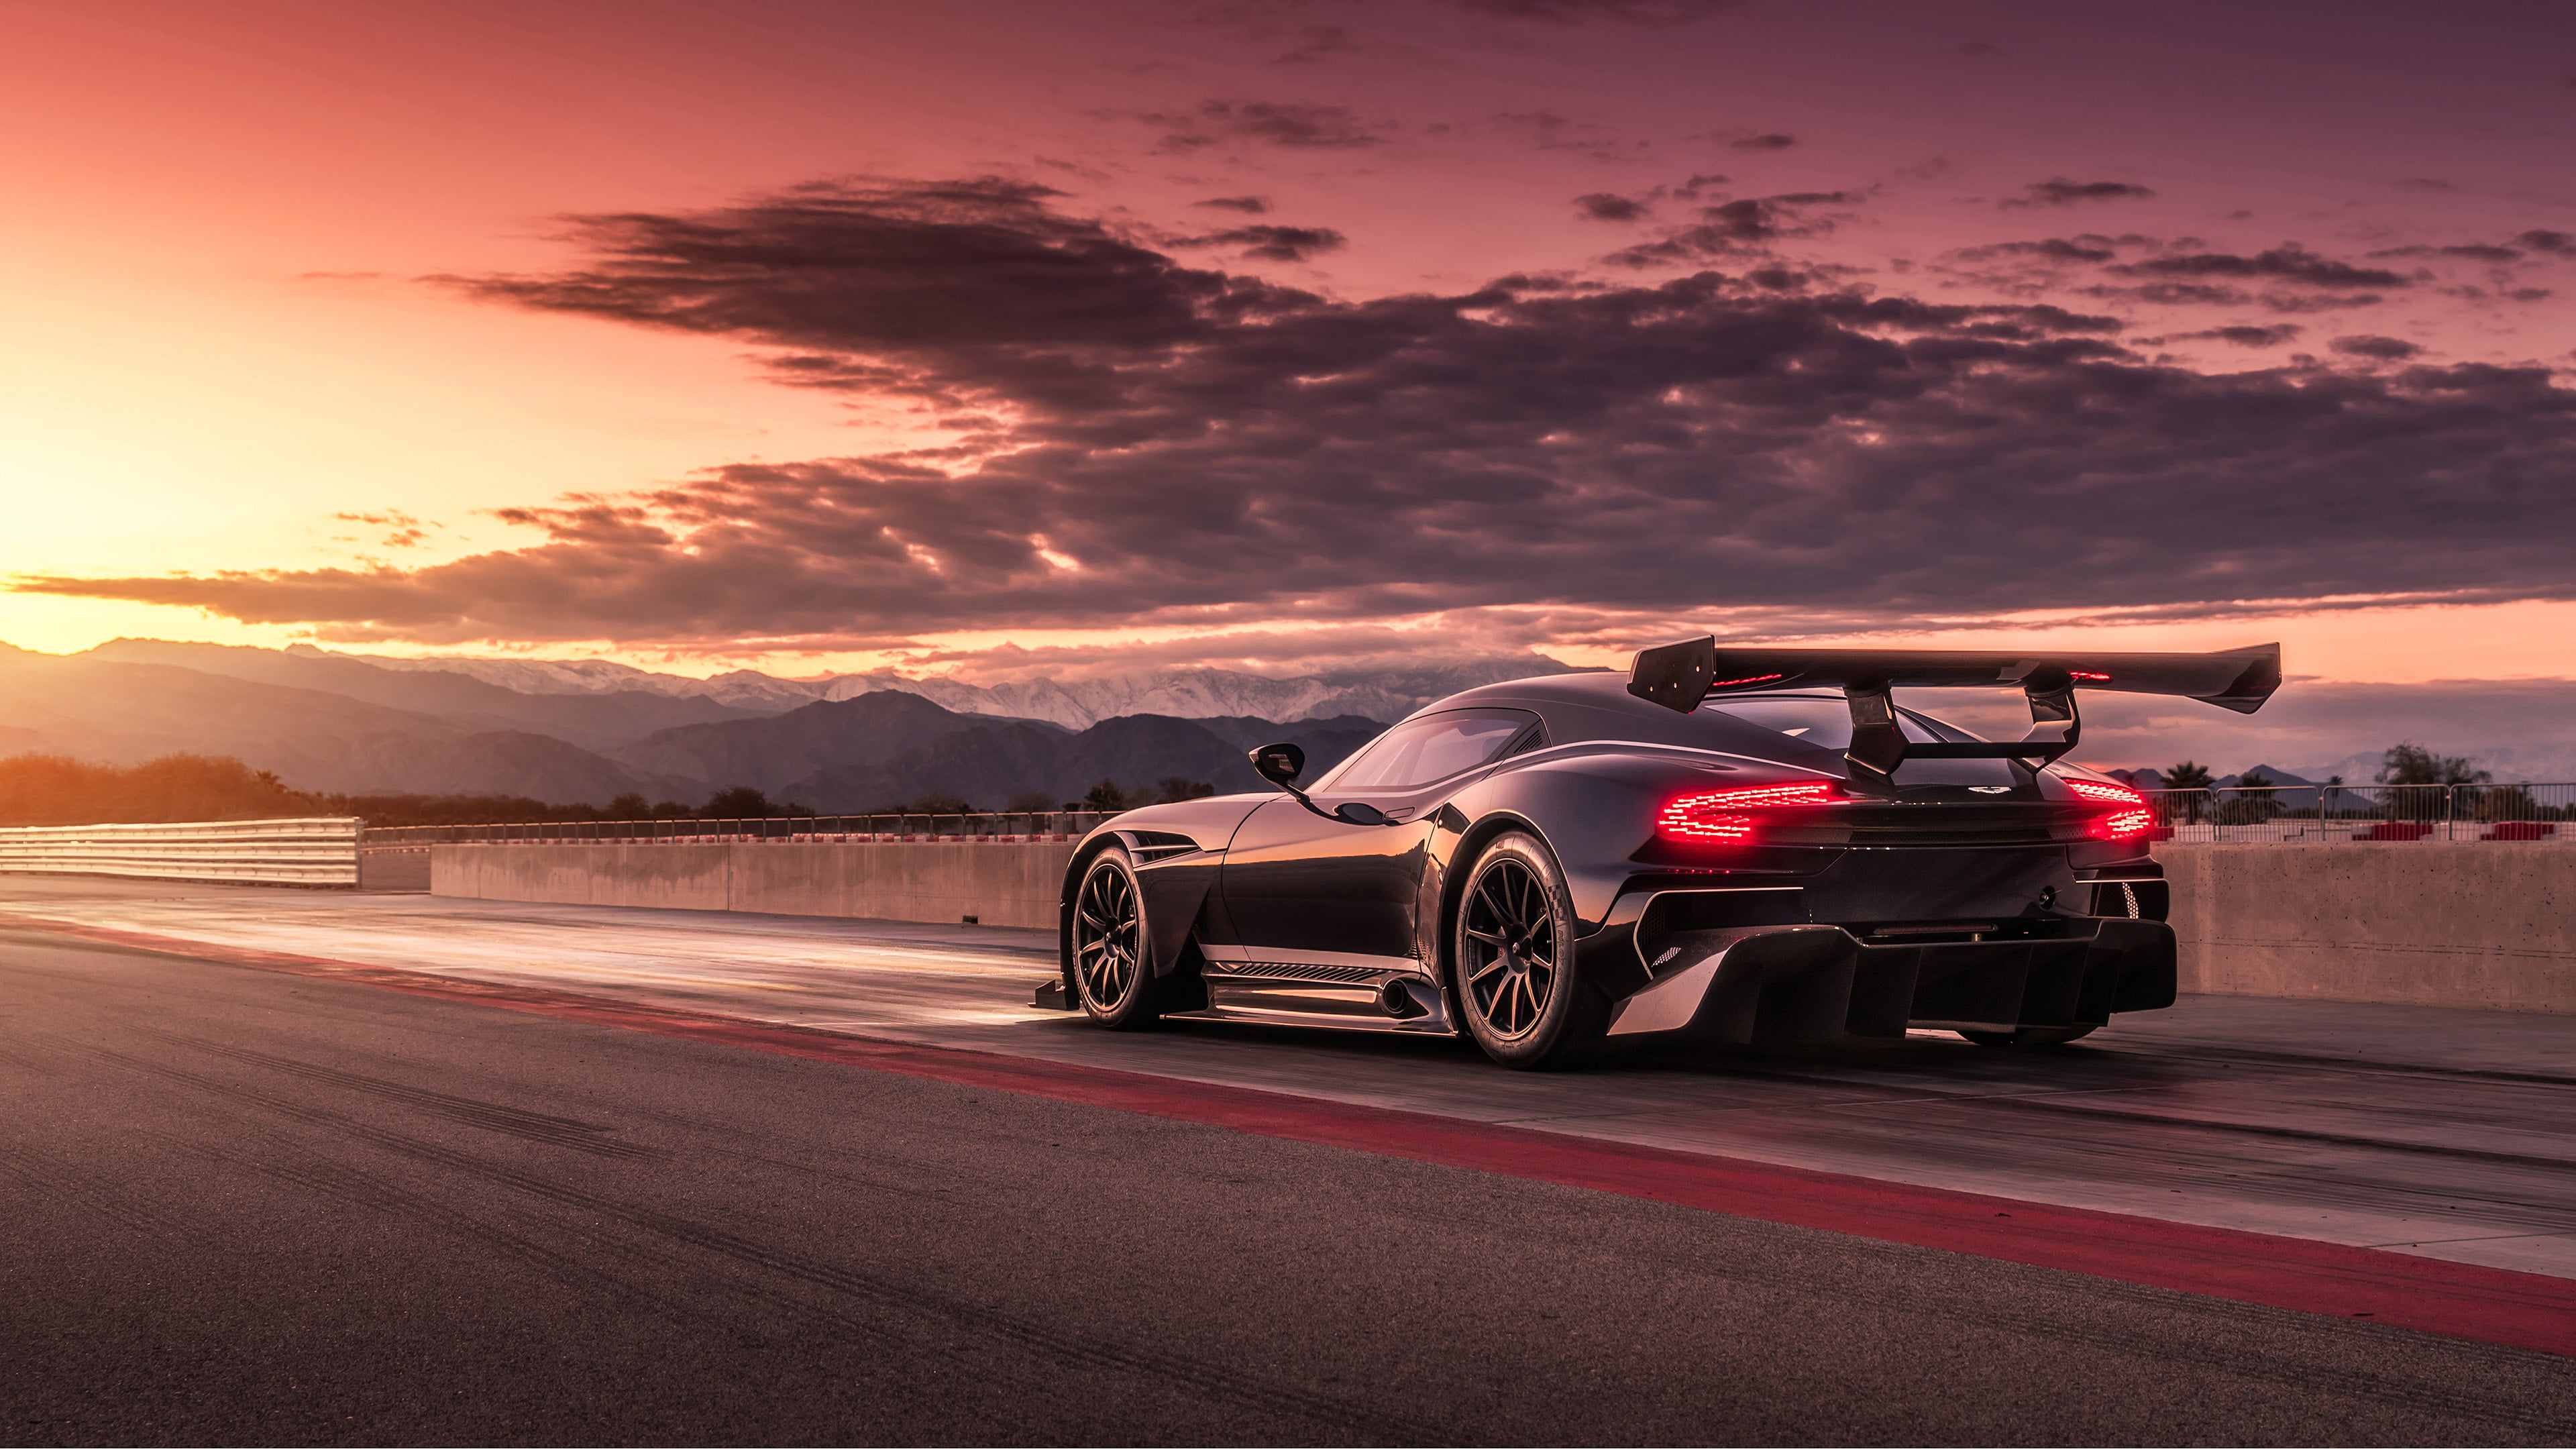 Aston Martin Vulcan, car, supercars, sunset, clouds, race tracks